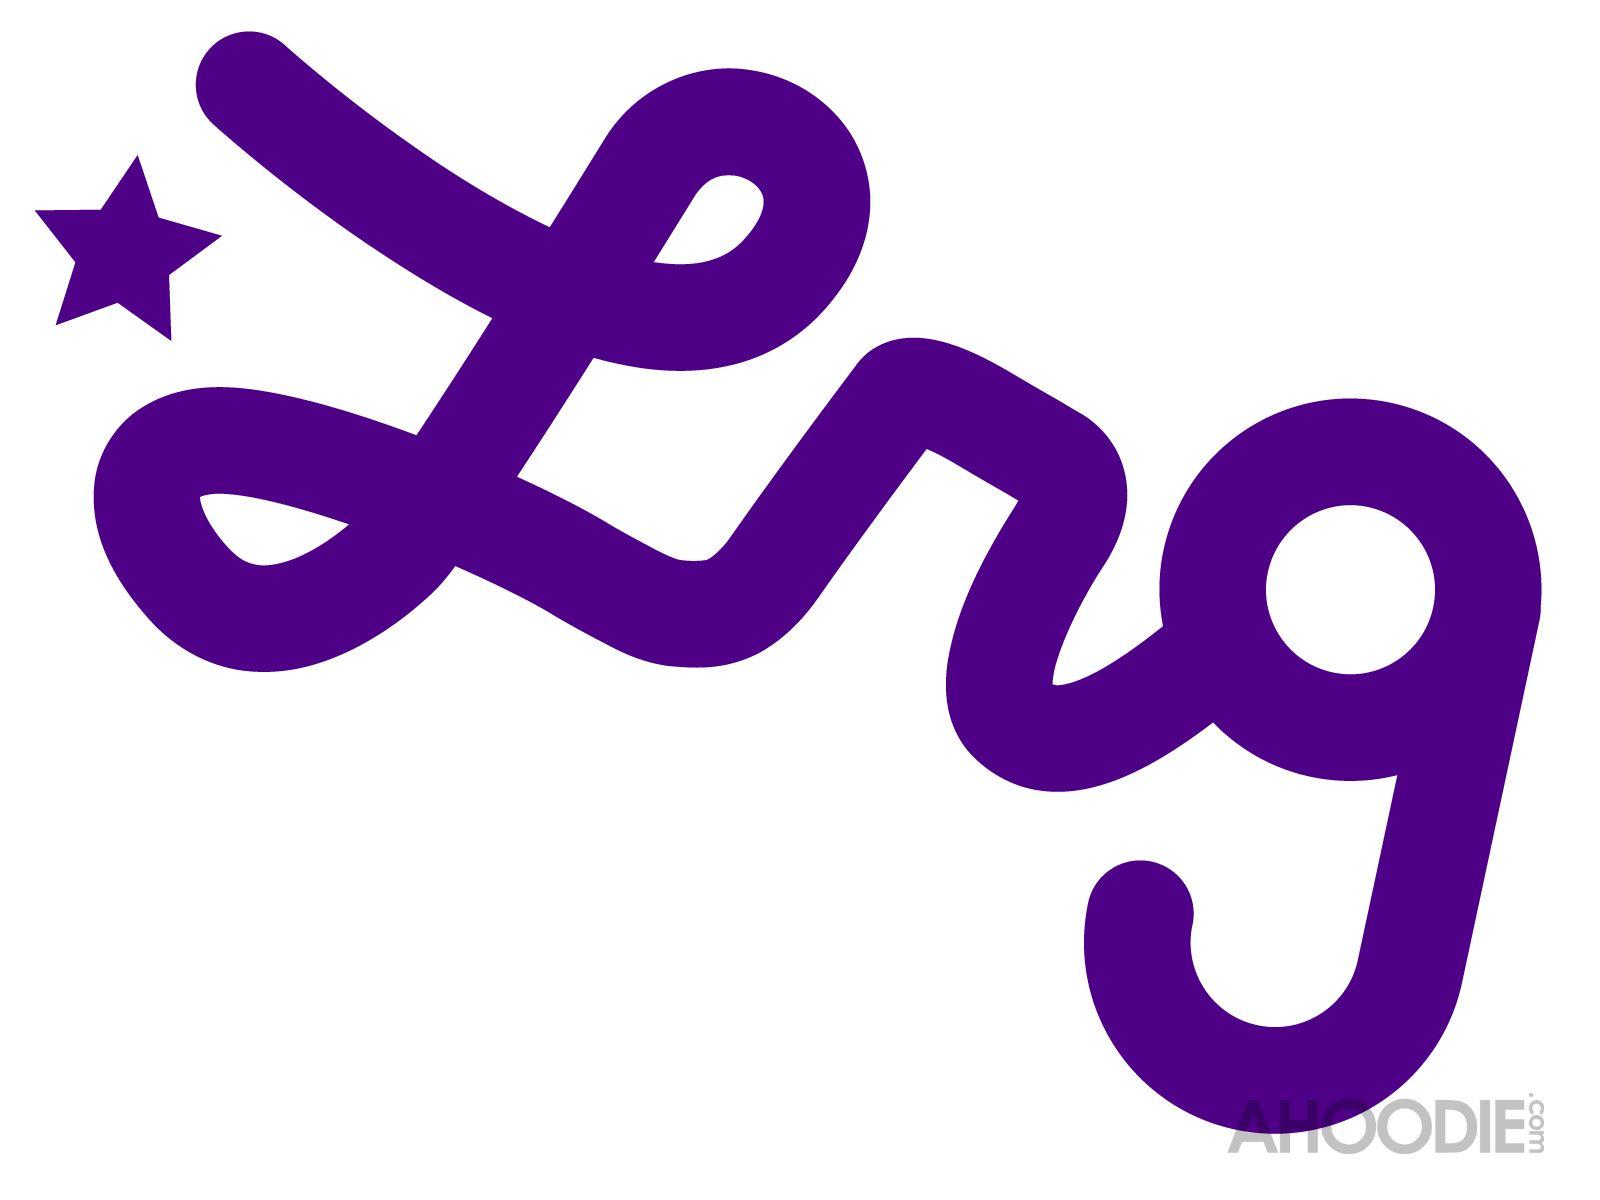 LRG Logo - Lrg Logos